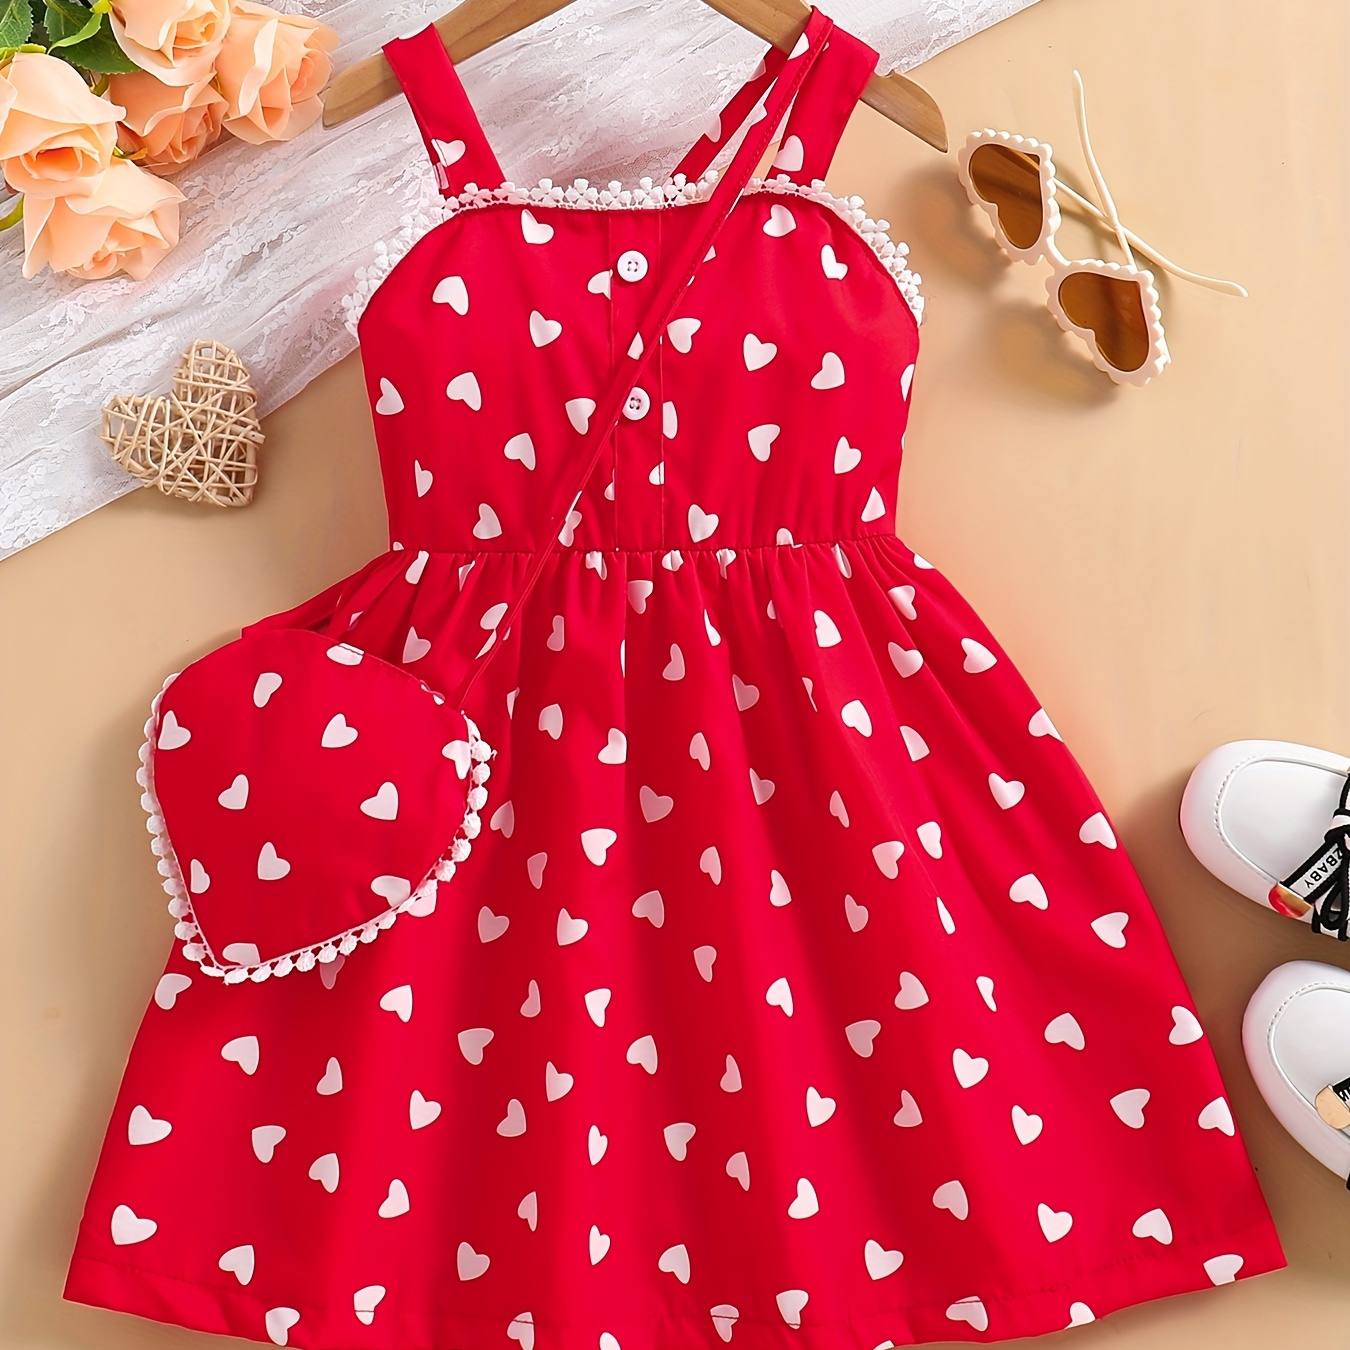 

Baby Girl's Polka Dot Tutu Dress + Cute Bag Set, Baby Girl's Summer Clothing